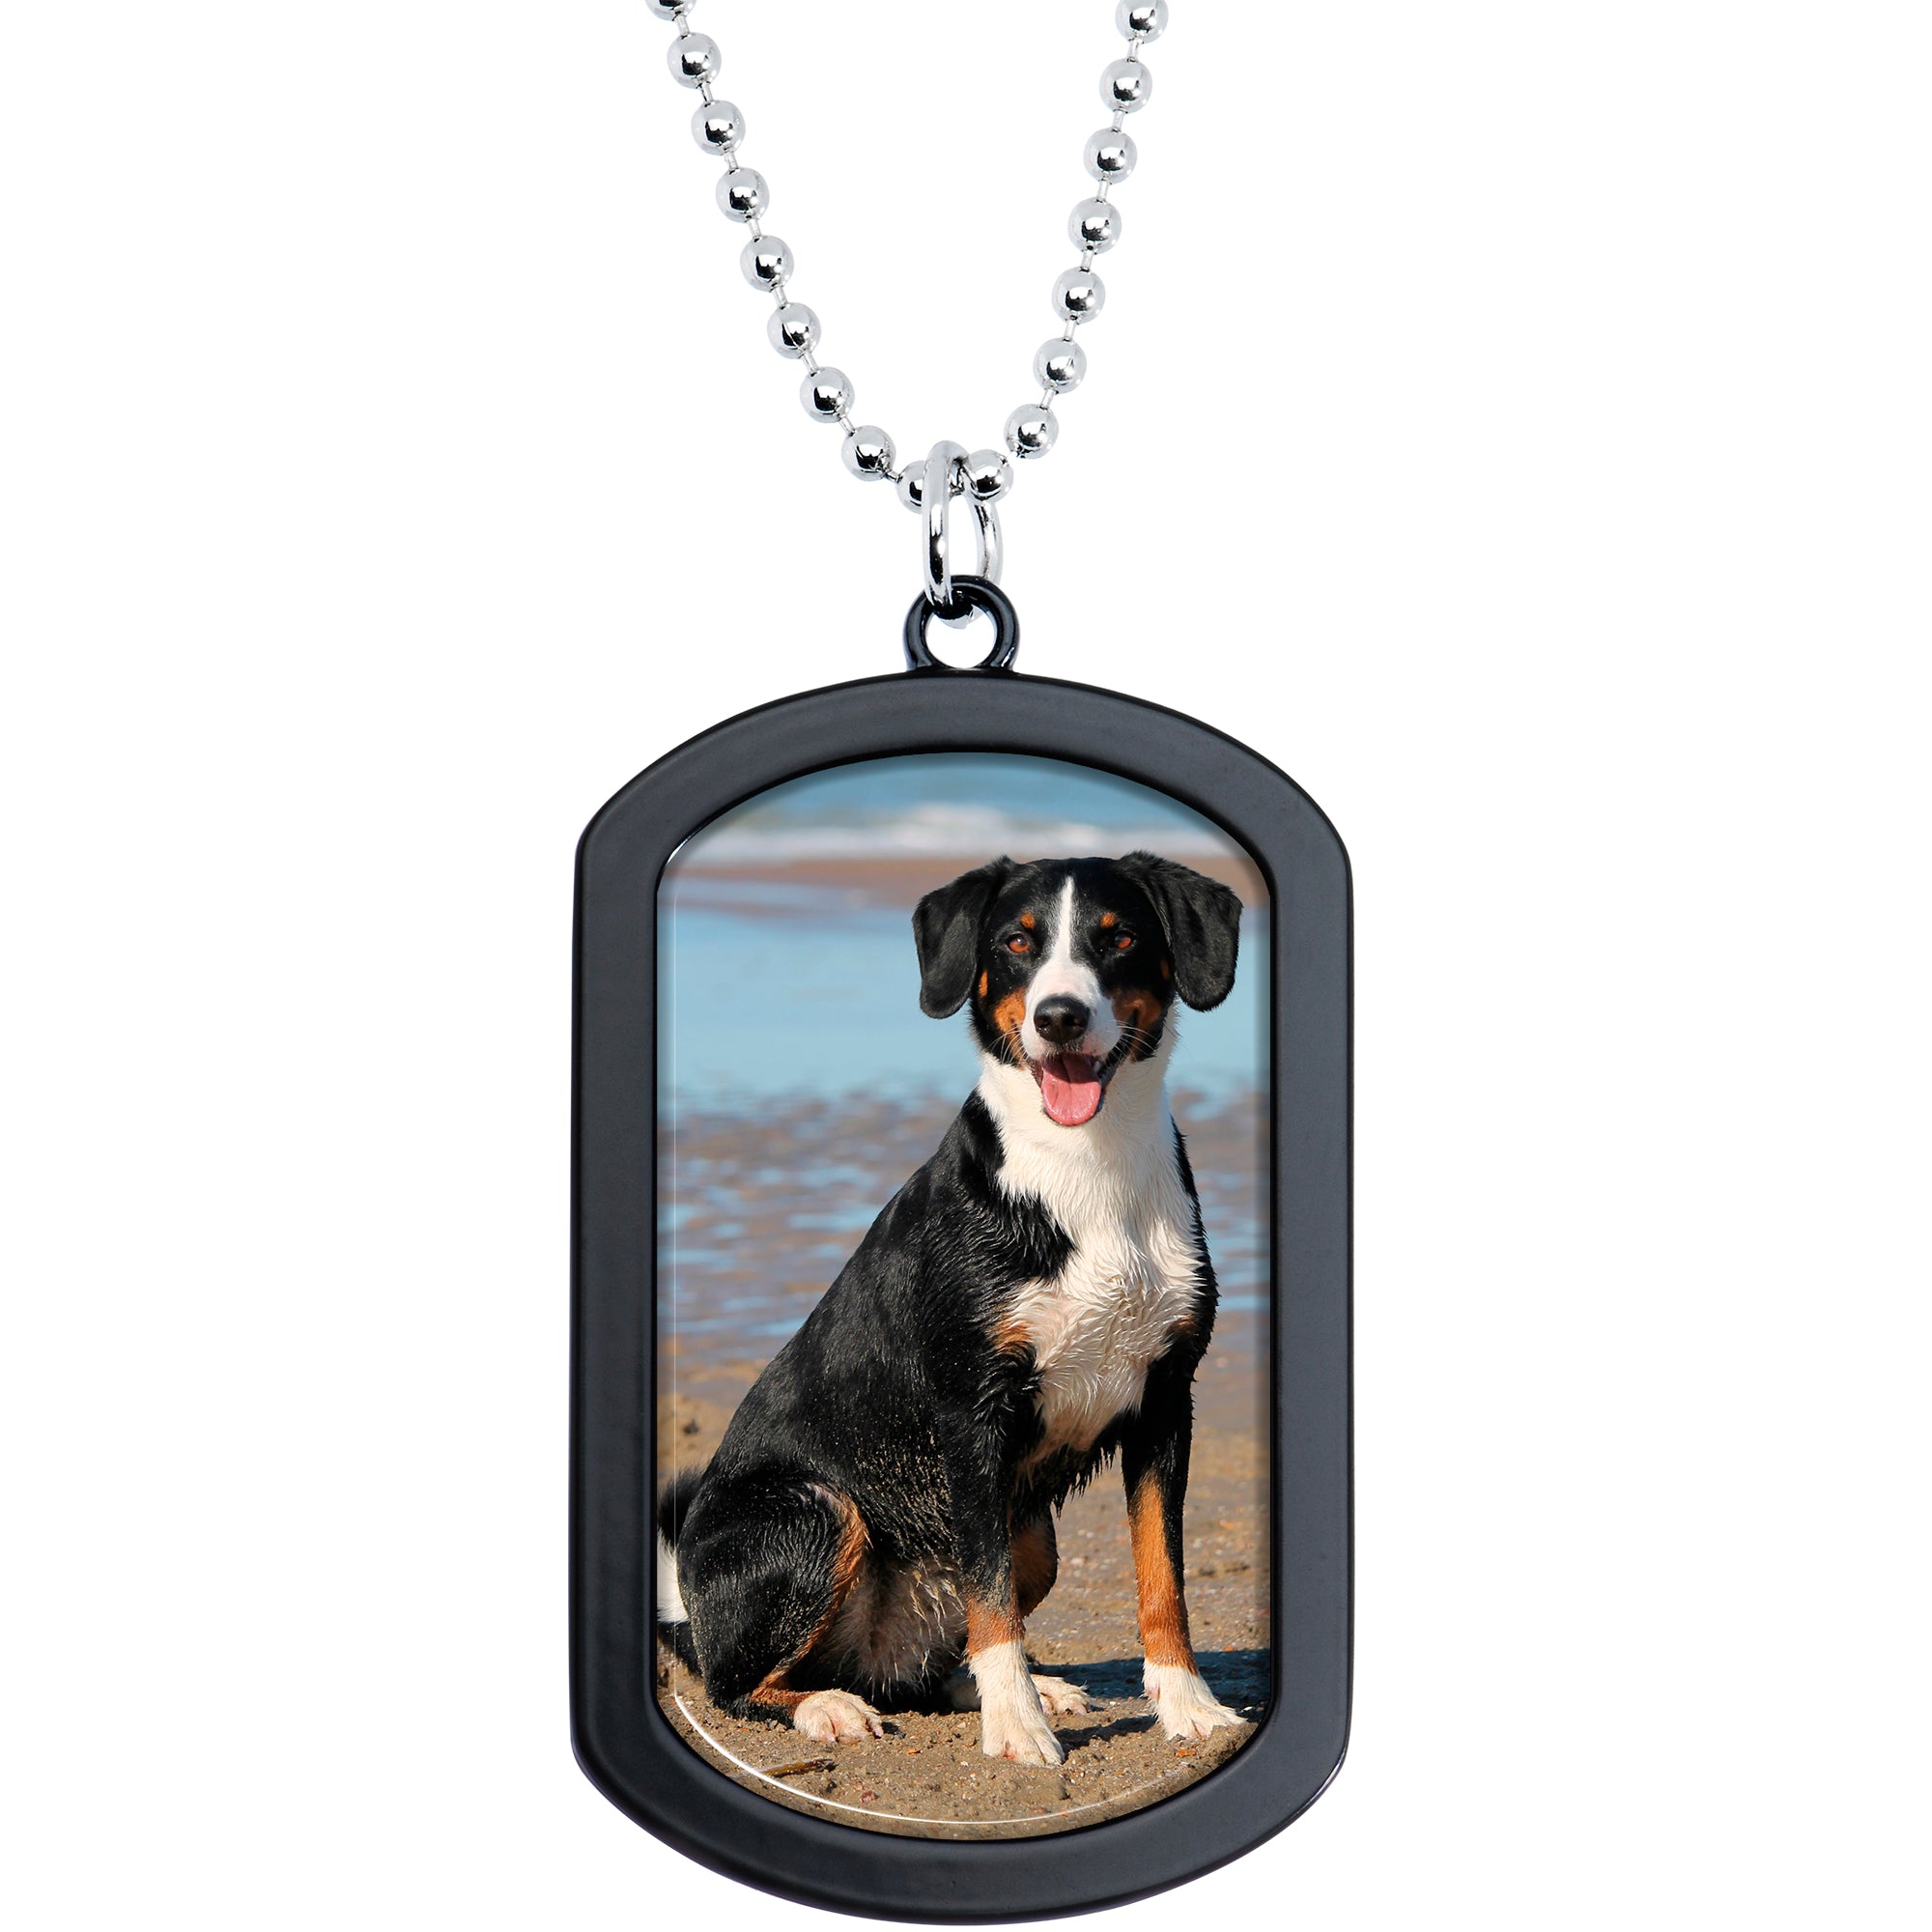 Personalized Black Dog Tag Photo Pendant Necklace